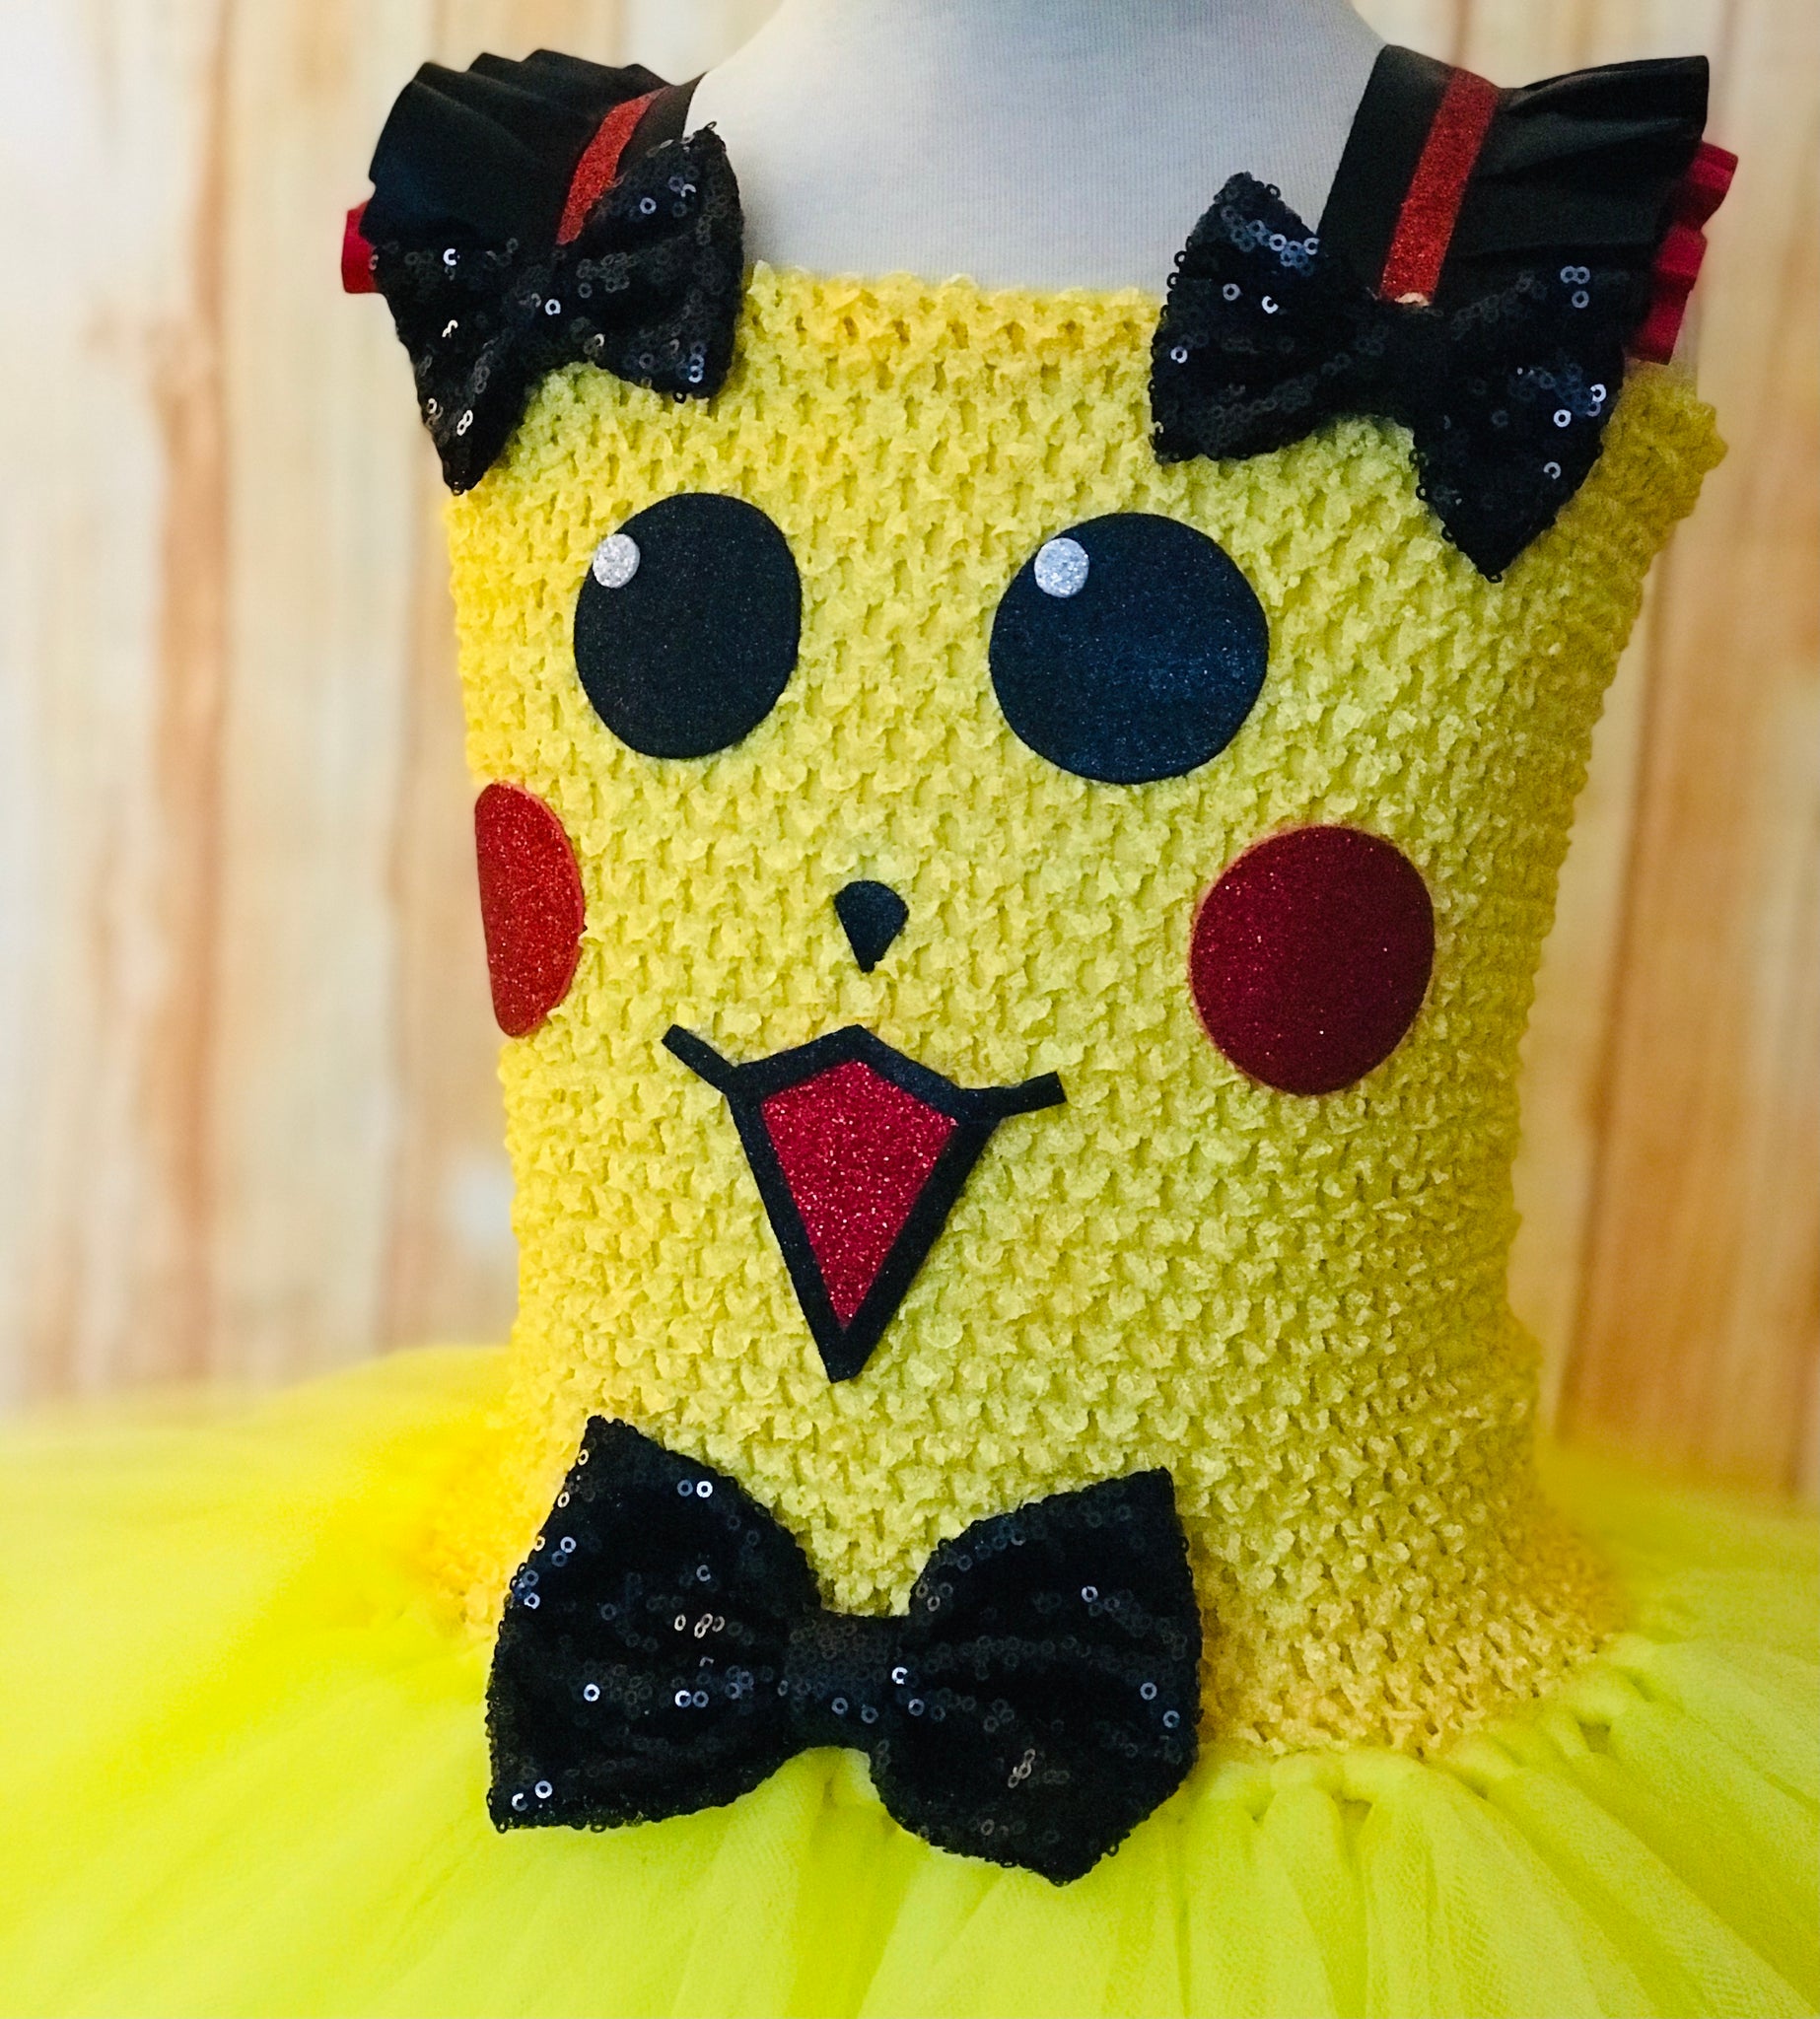 Child Pokémon Pikachu Classic Costume